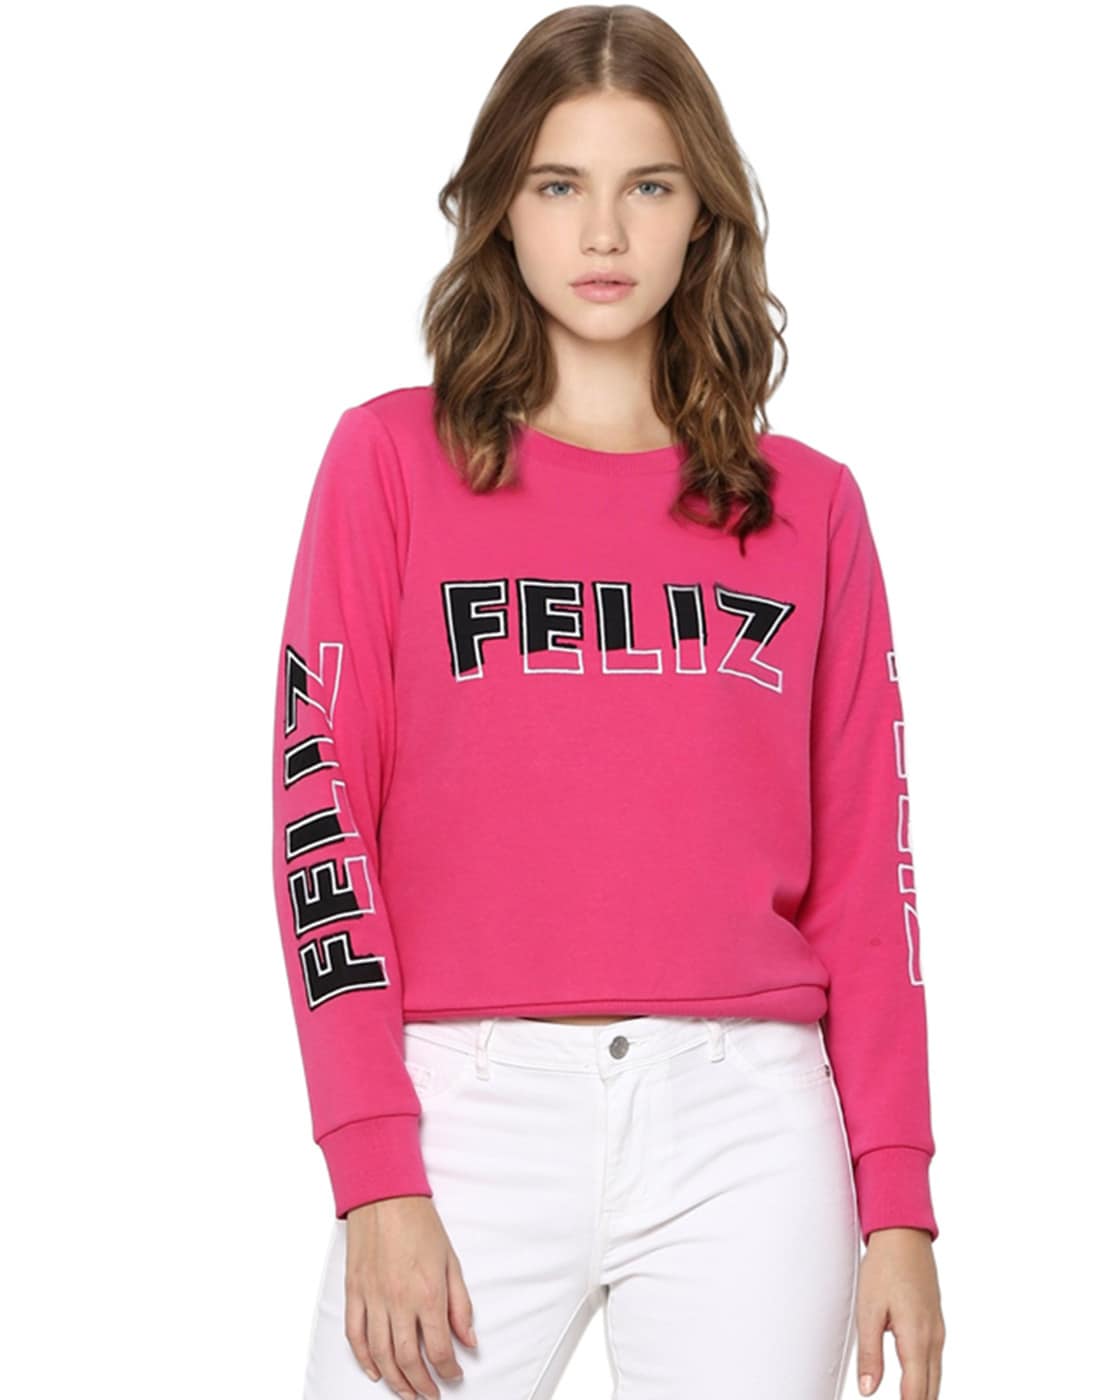 Victoria's Secret Pink Sweatshirt Wide Neck Pullover